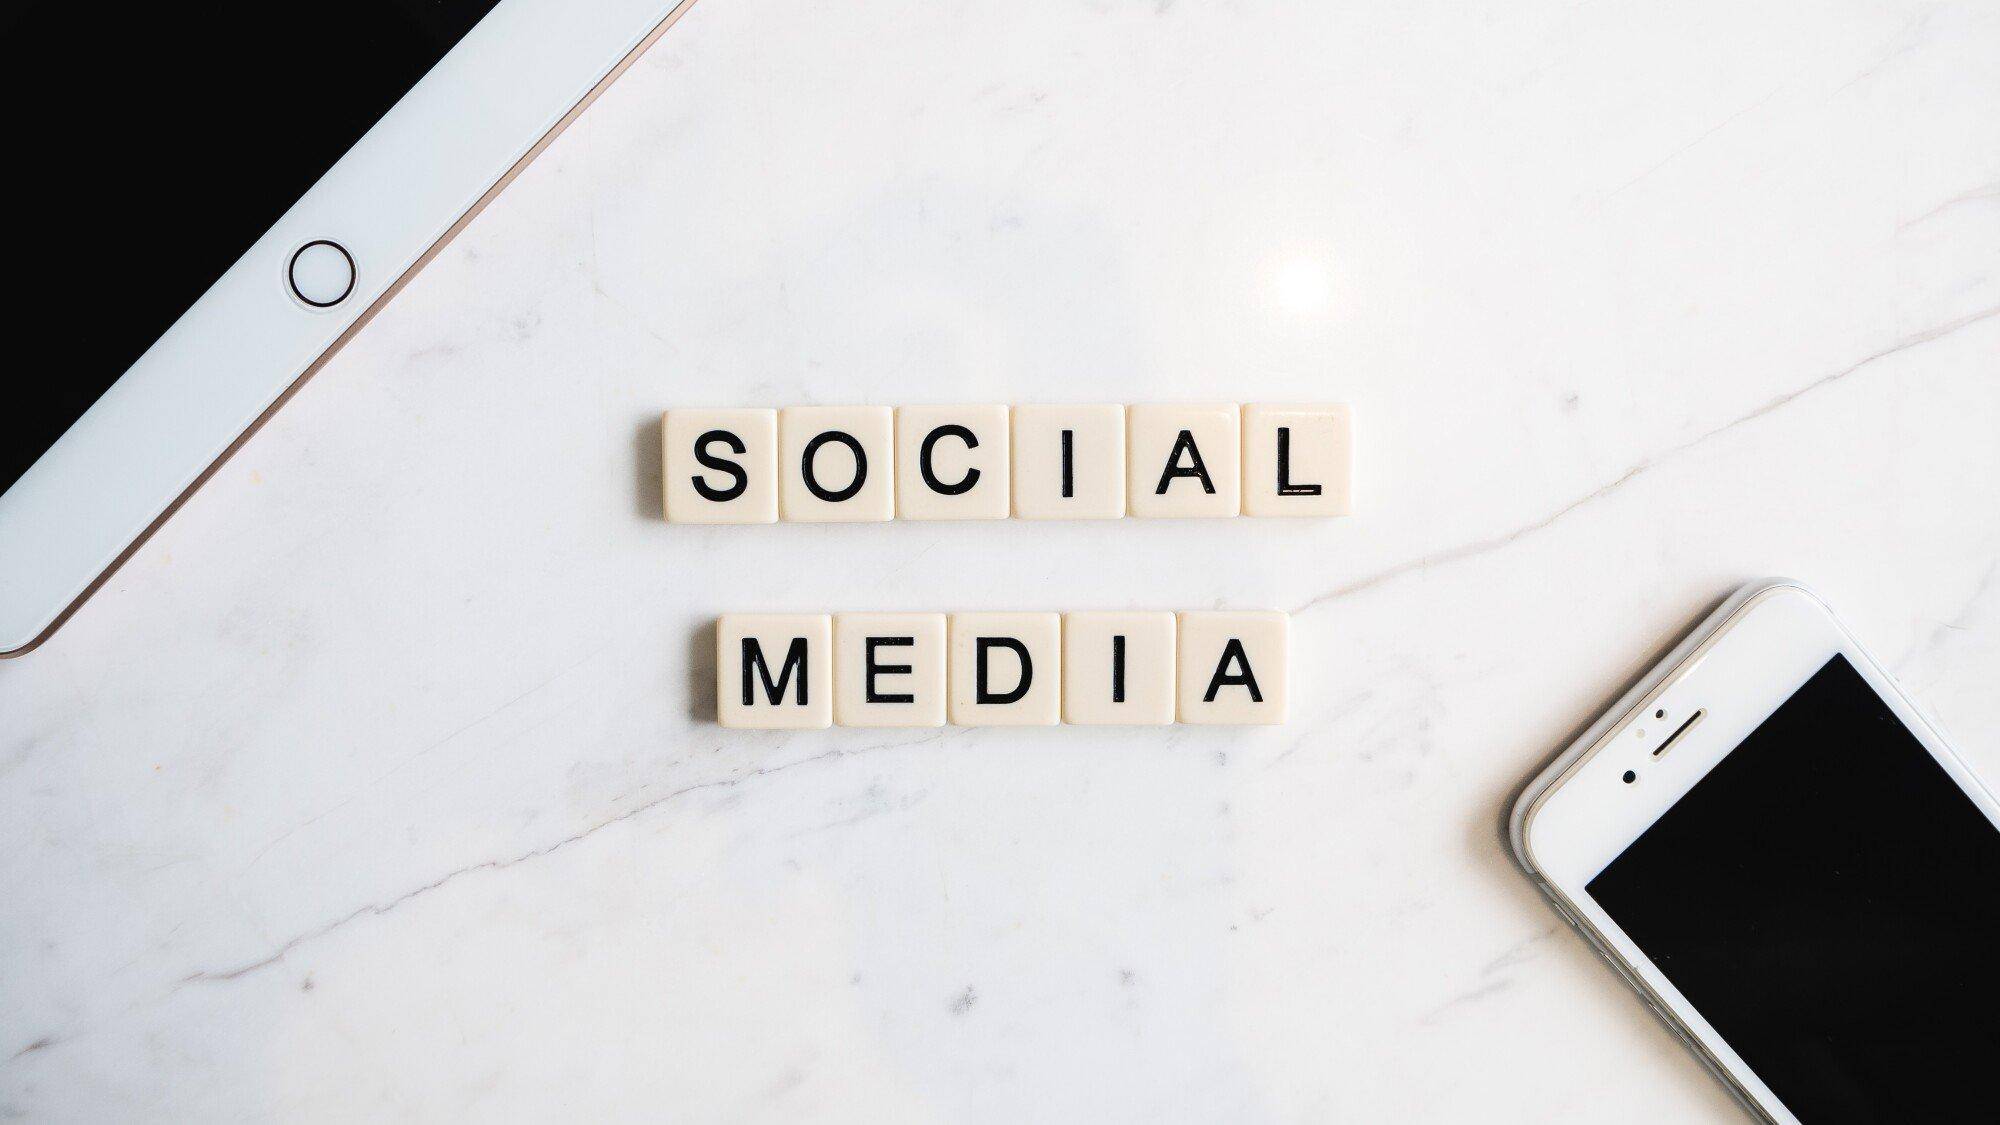 Social Media Marketing Near Me: How To Choose the Right Agency